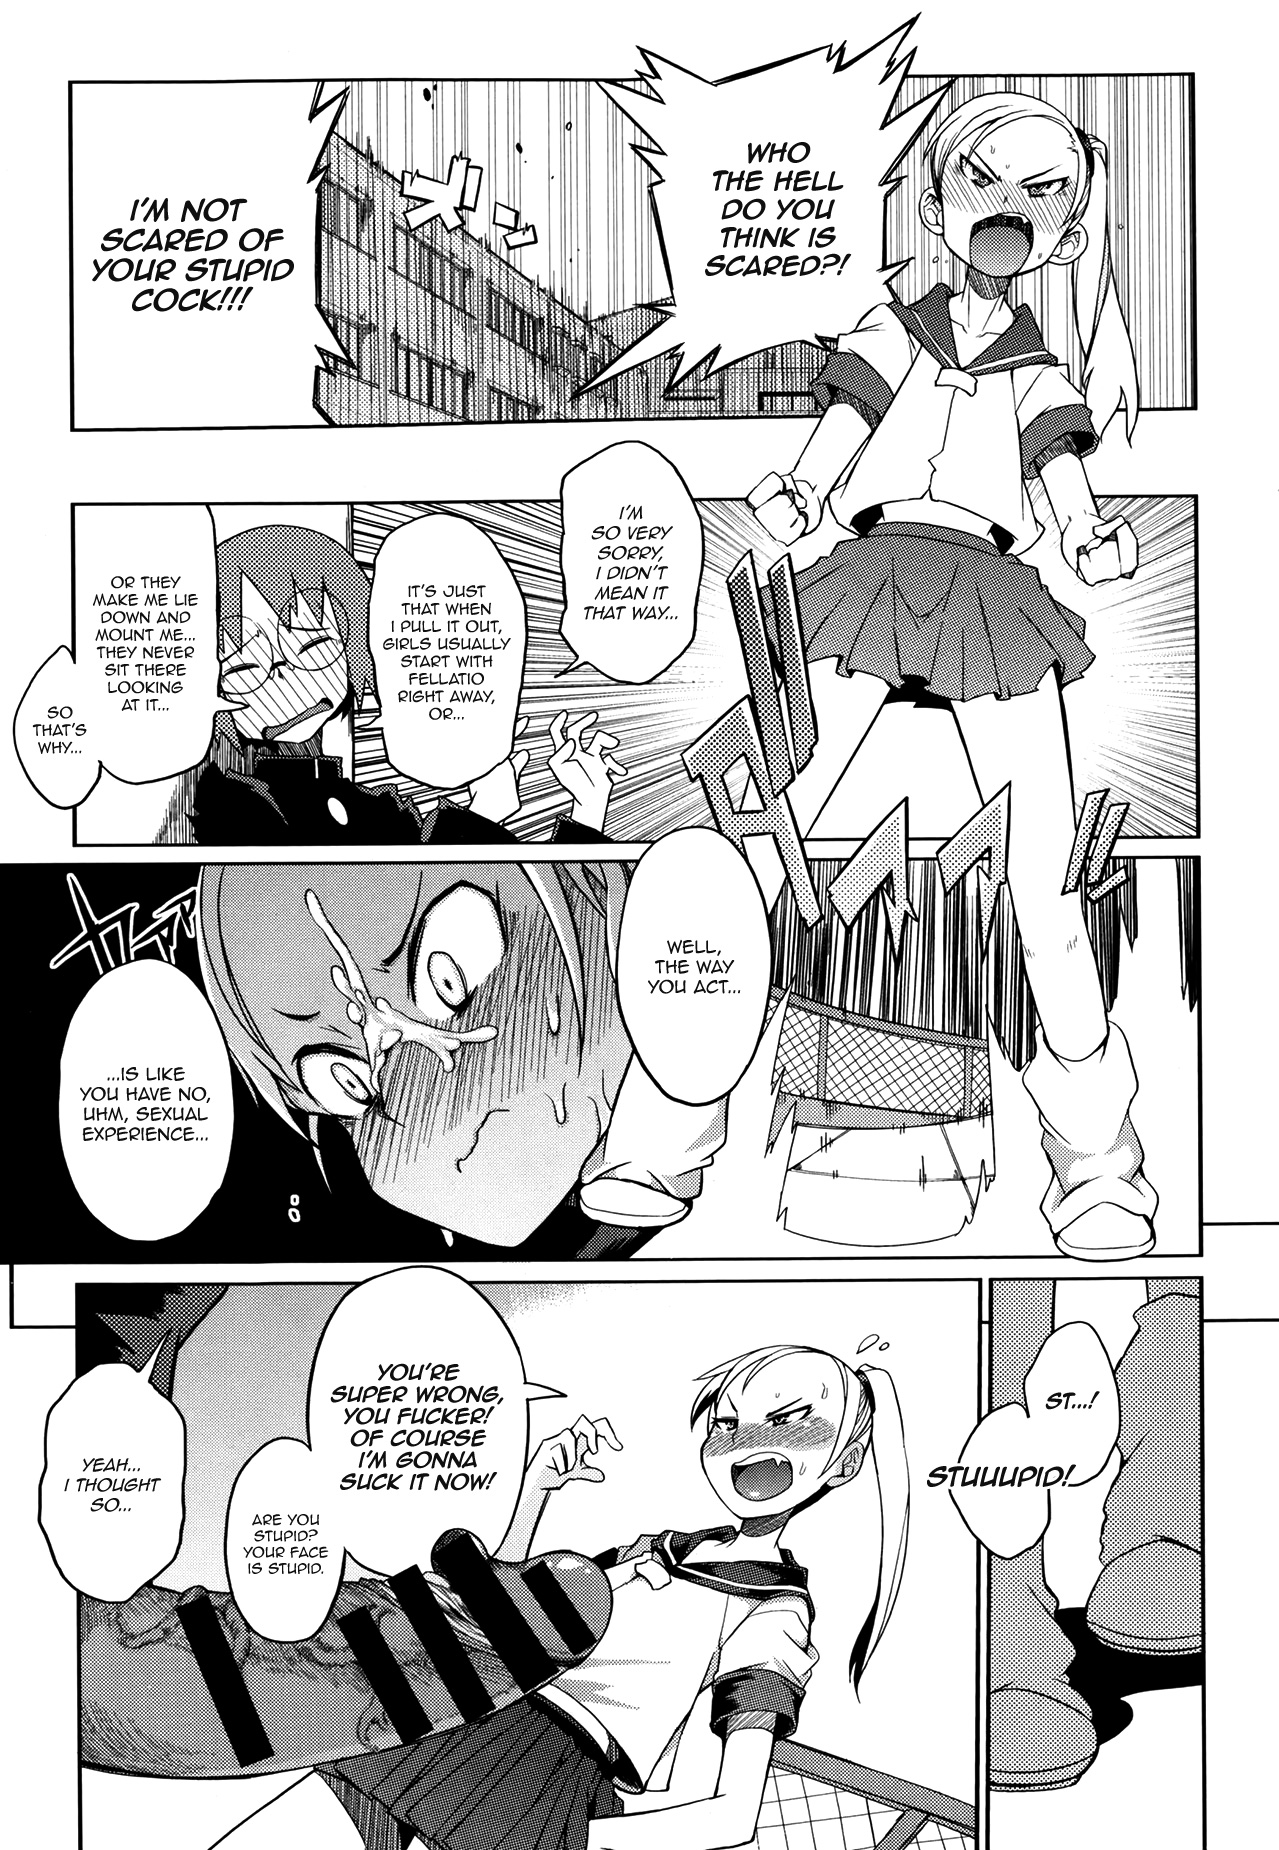 [F4U]好奇心が猫をxxxした（オリジナル）[英語] = BoggyB + maipantsu + Ero Manga Girls =